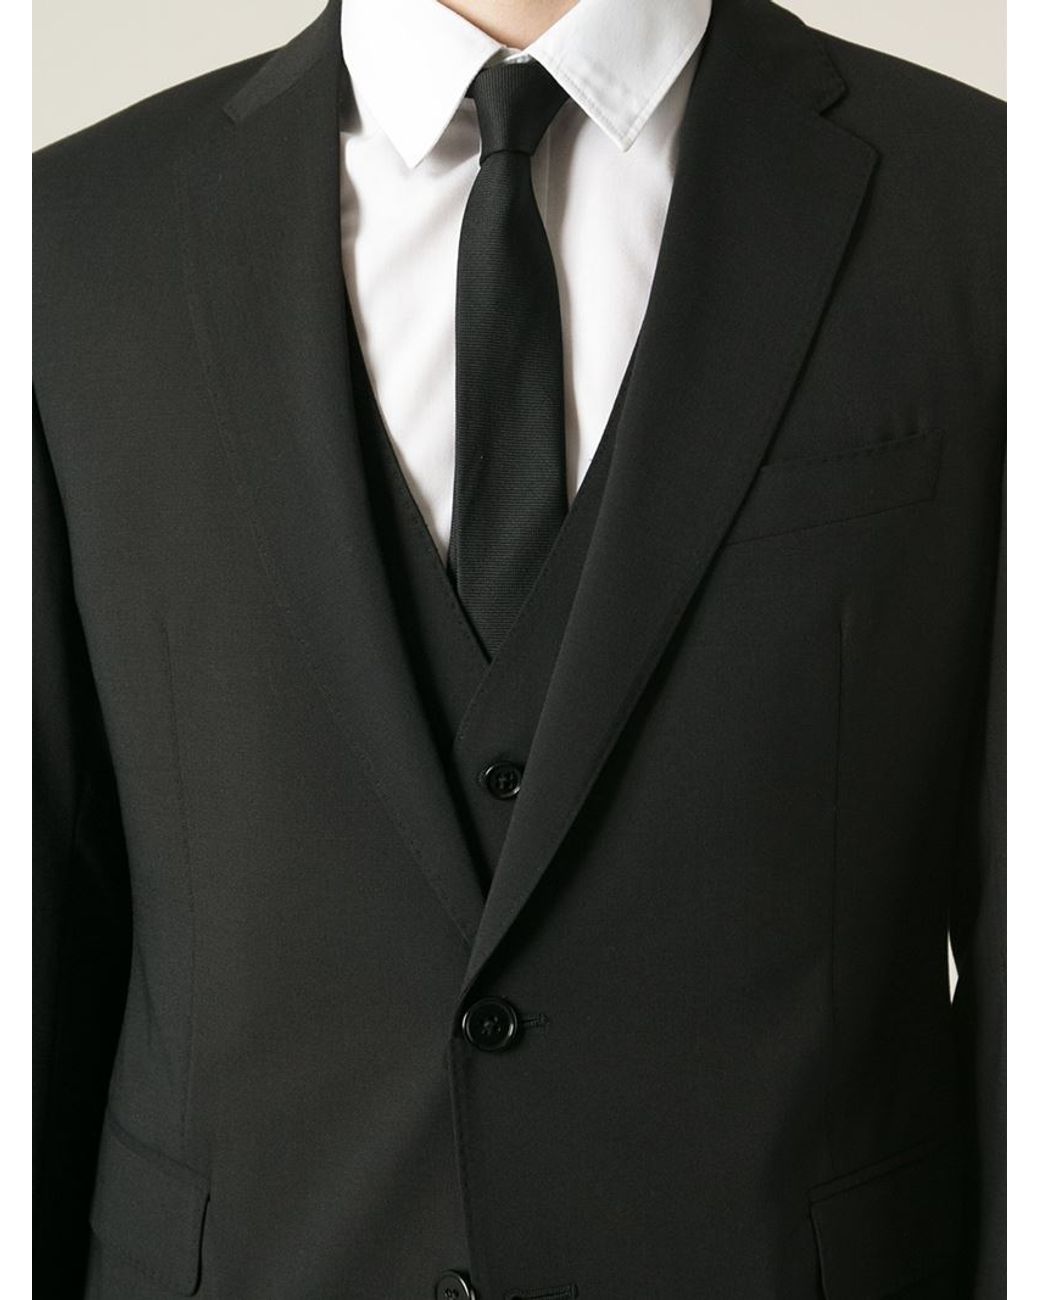 Introducir 74+ imagen armani formal suits - Viaterra.mx